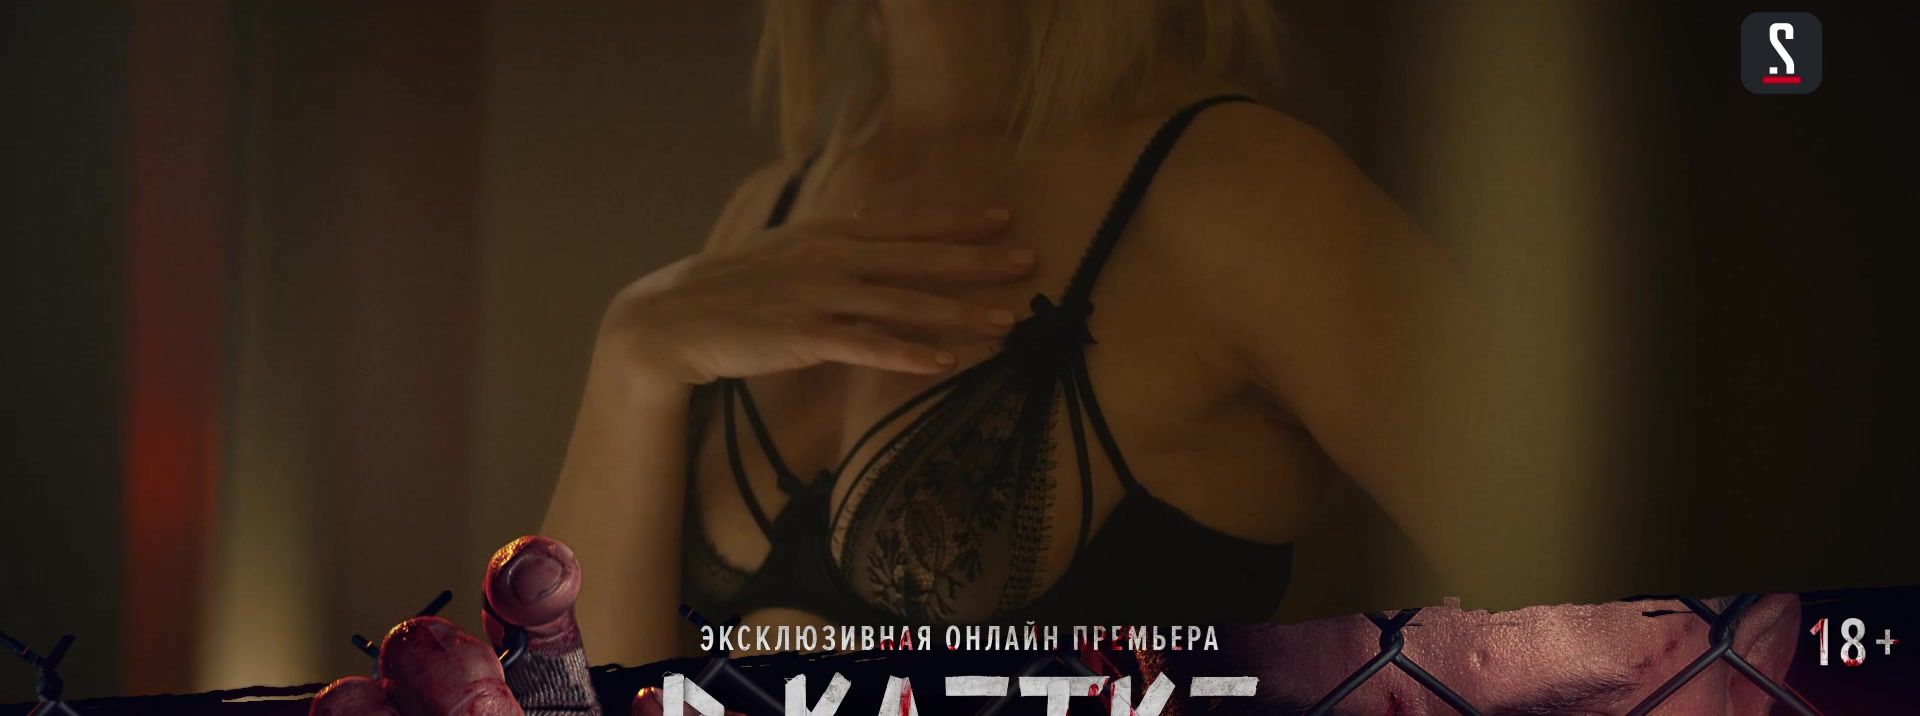 HellPorno Agata Muceniece, Ekaterina Malikova, Alena Mihailova nude - V kletke s01e07 (2019) Adult Toys